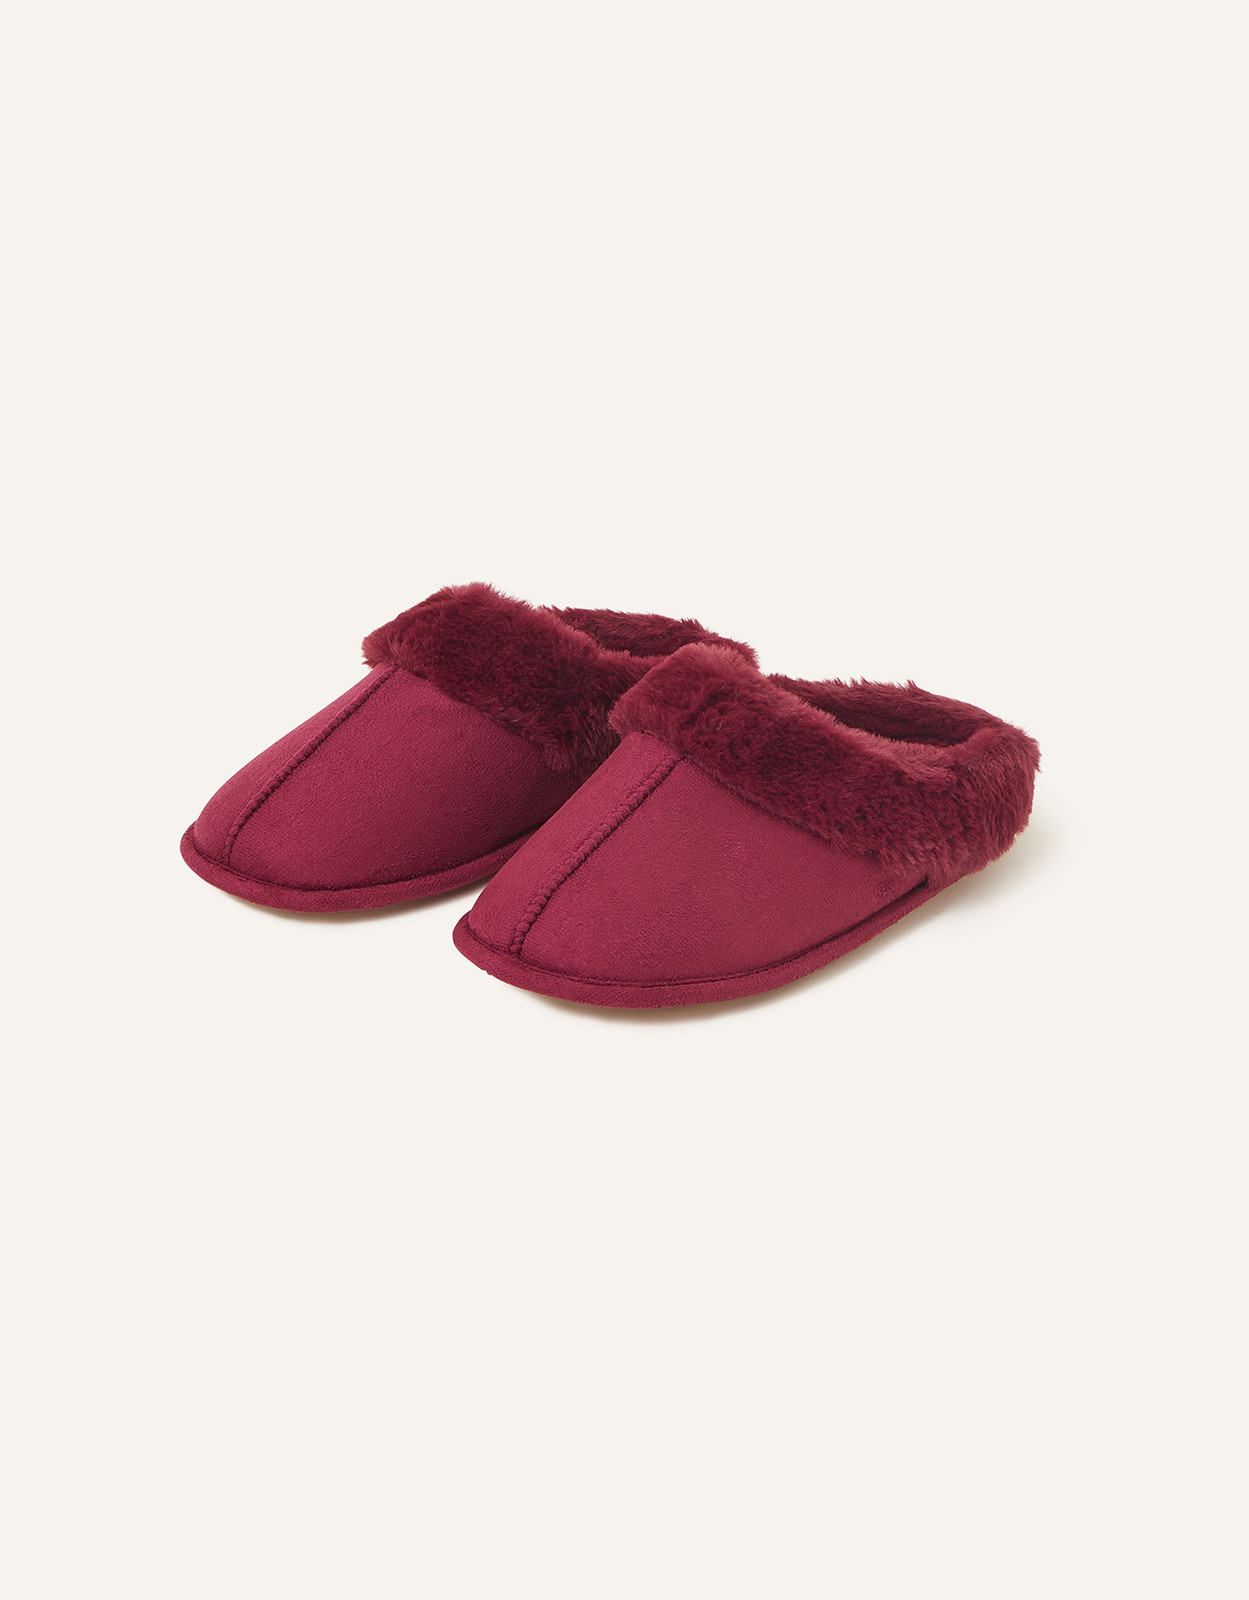 Accessorize Women's Faux Fur Mule Slippers Red, Size: S